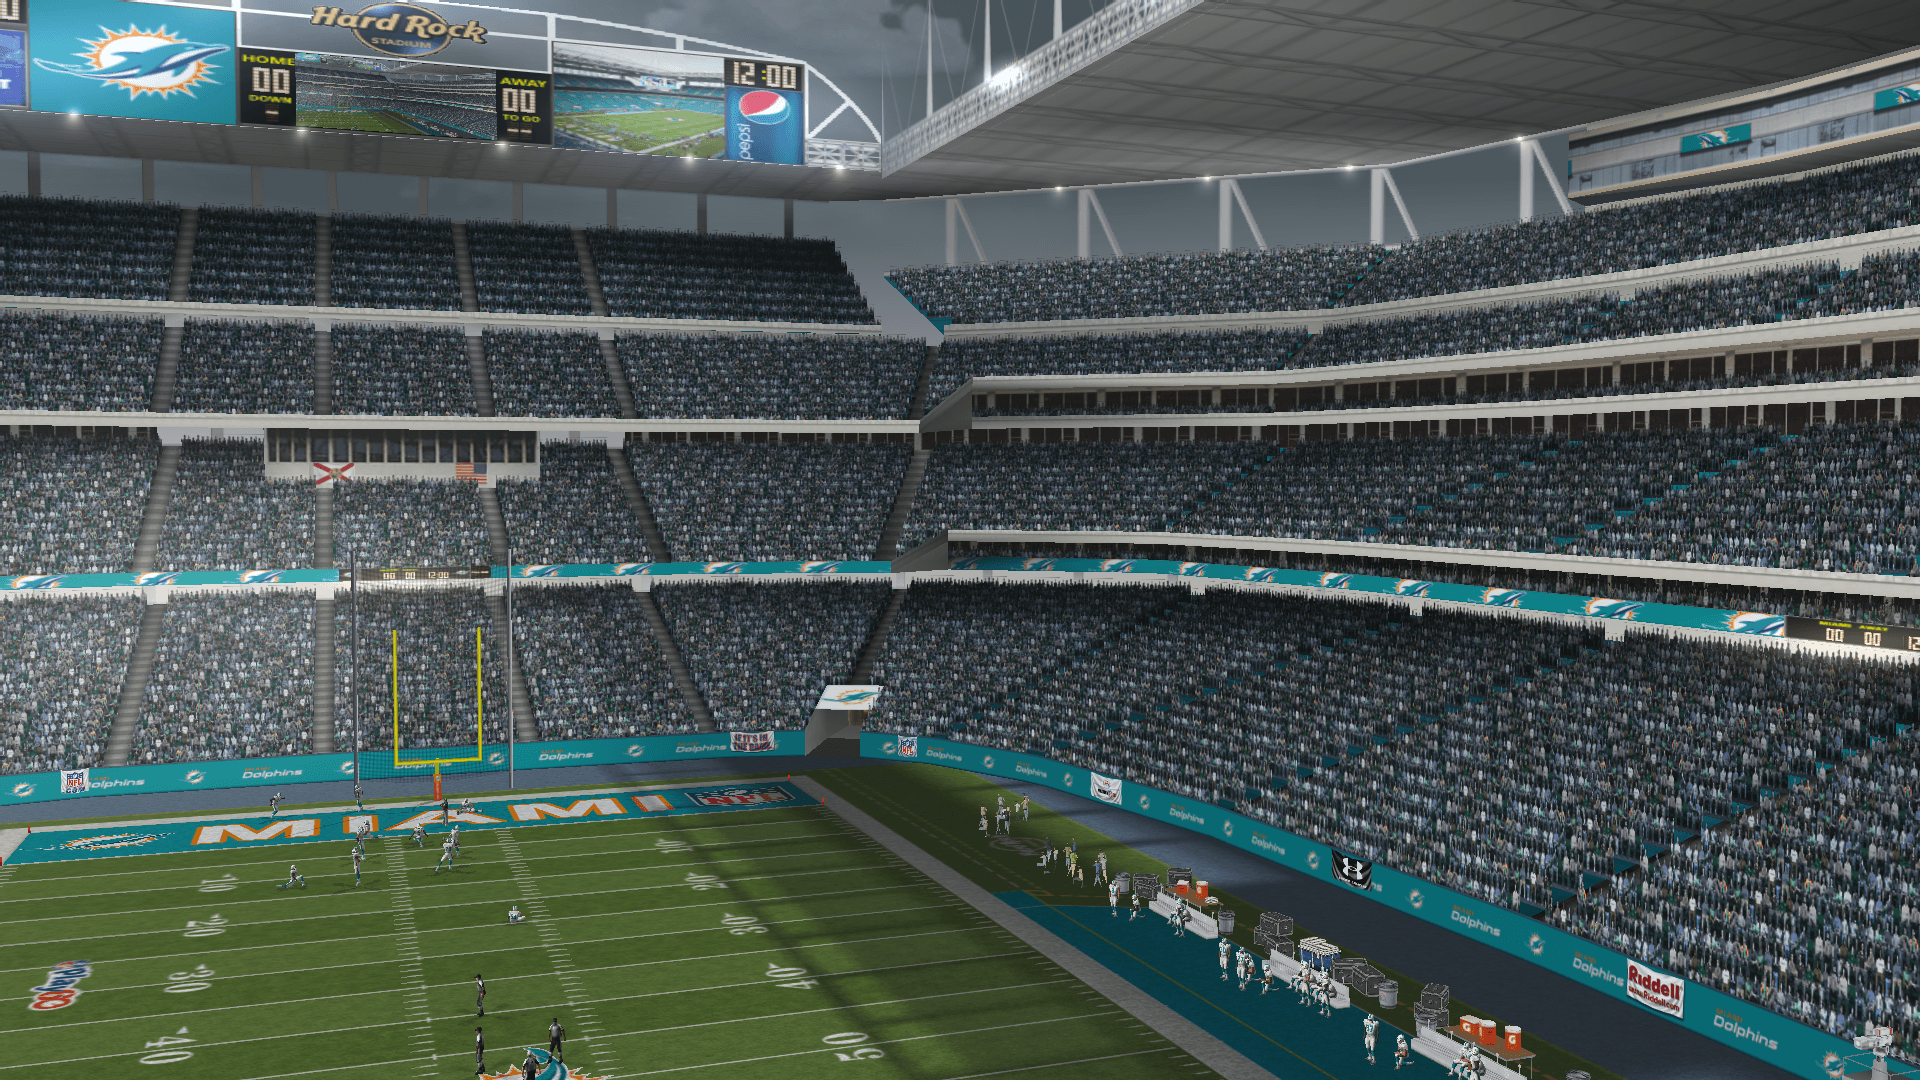 Hard Rock Stadium (Dolphins) version 1.2